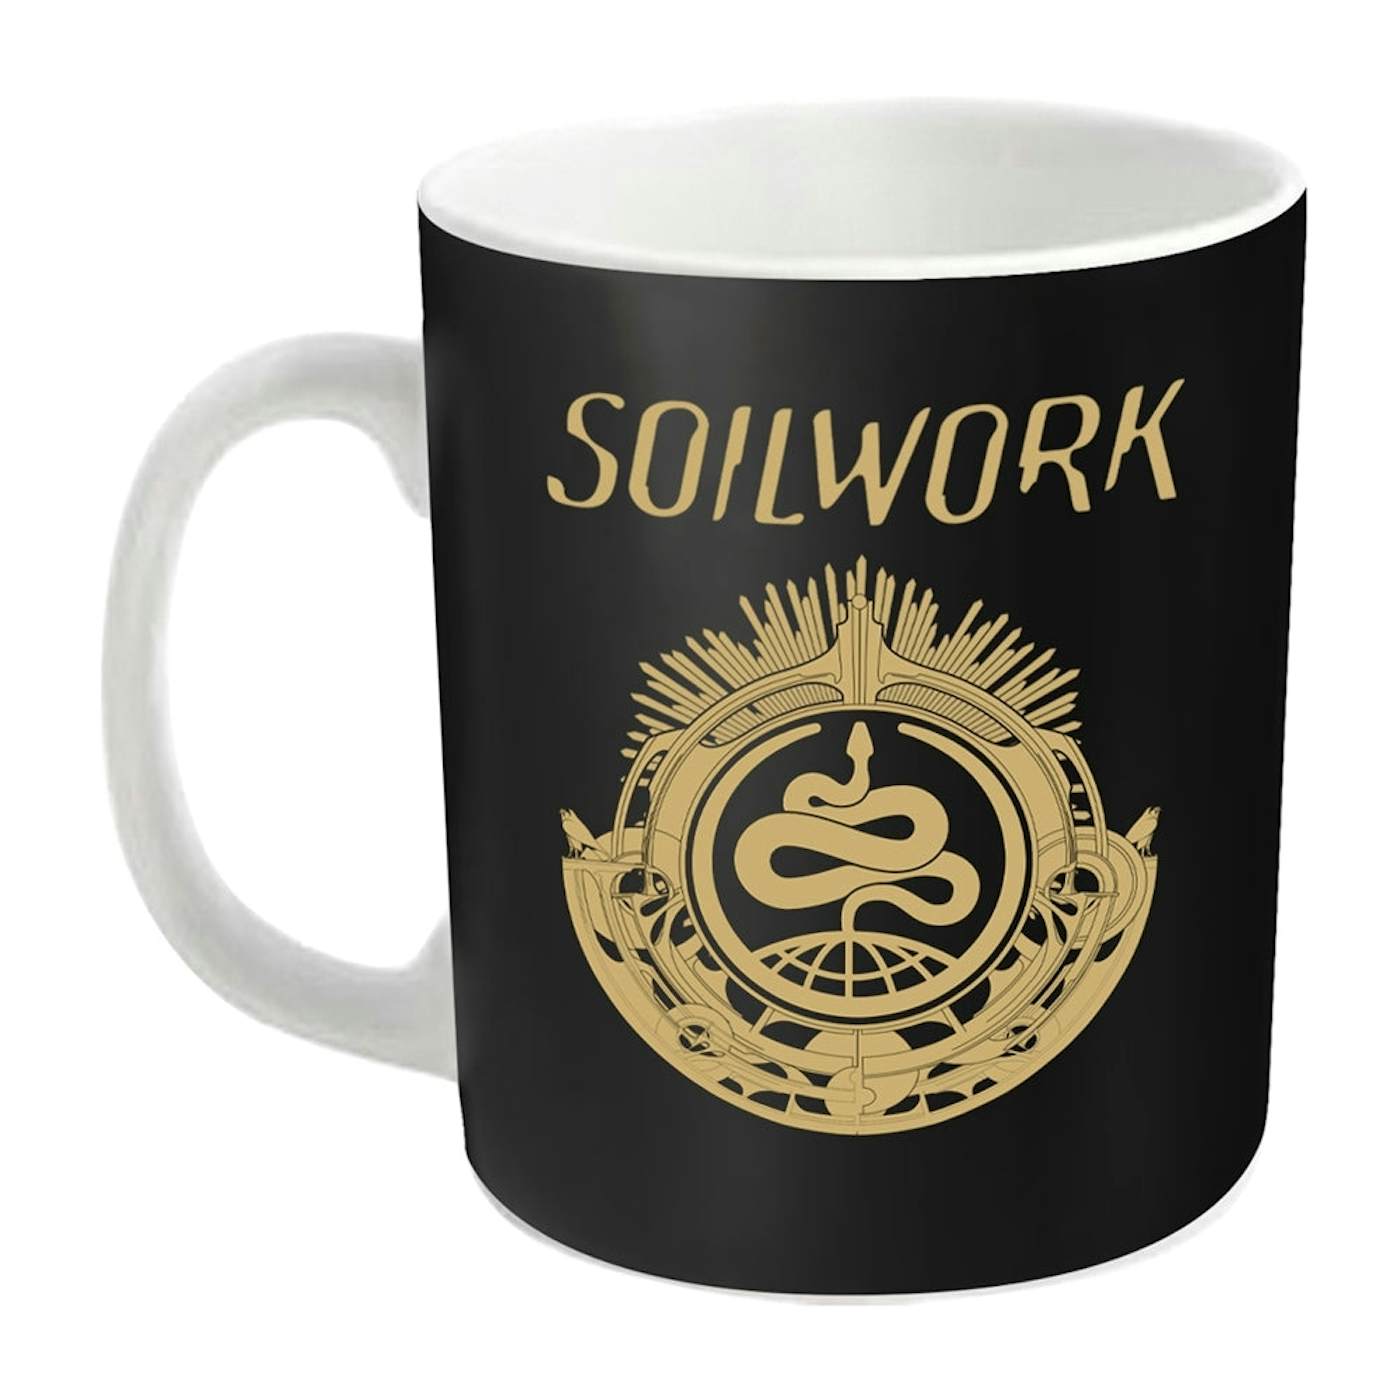 Soilwork Mug - Snake